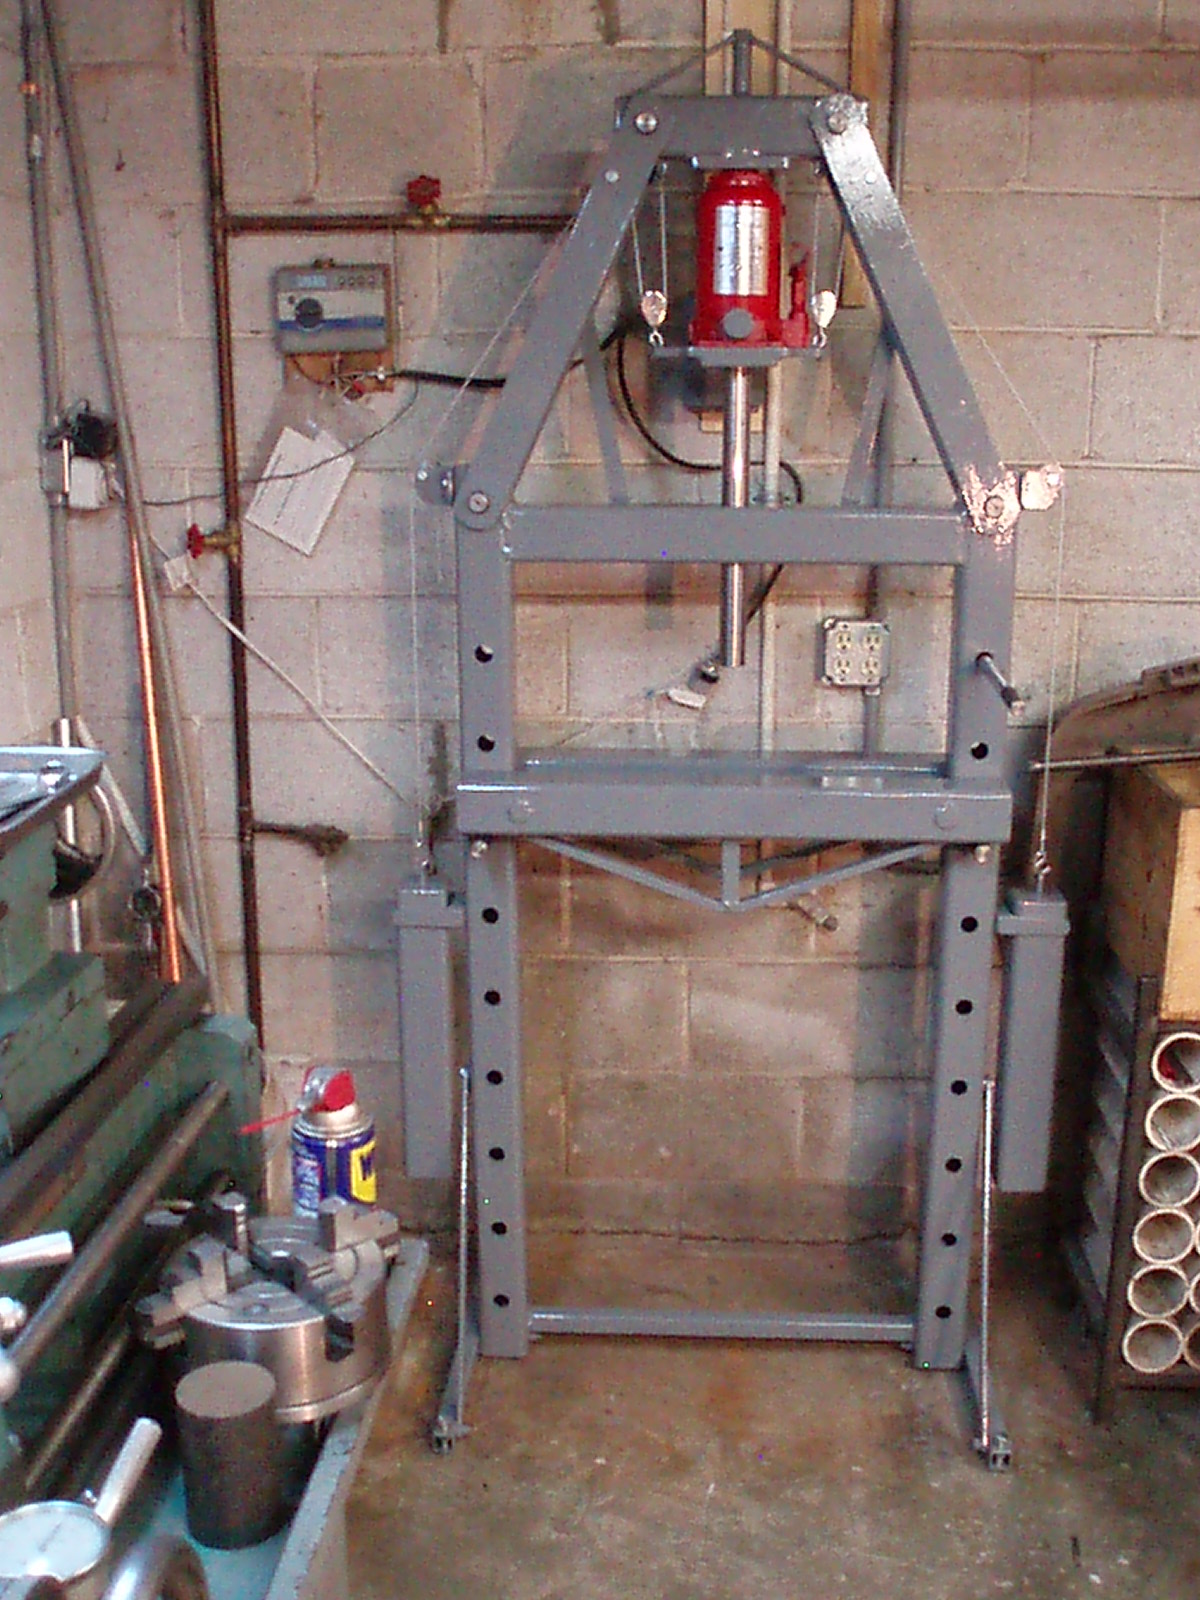 Homemade Hydraulic Press